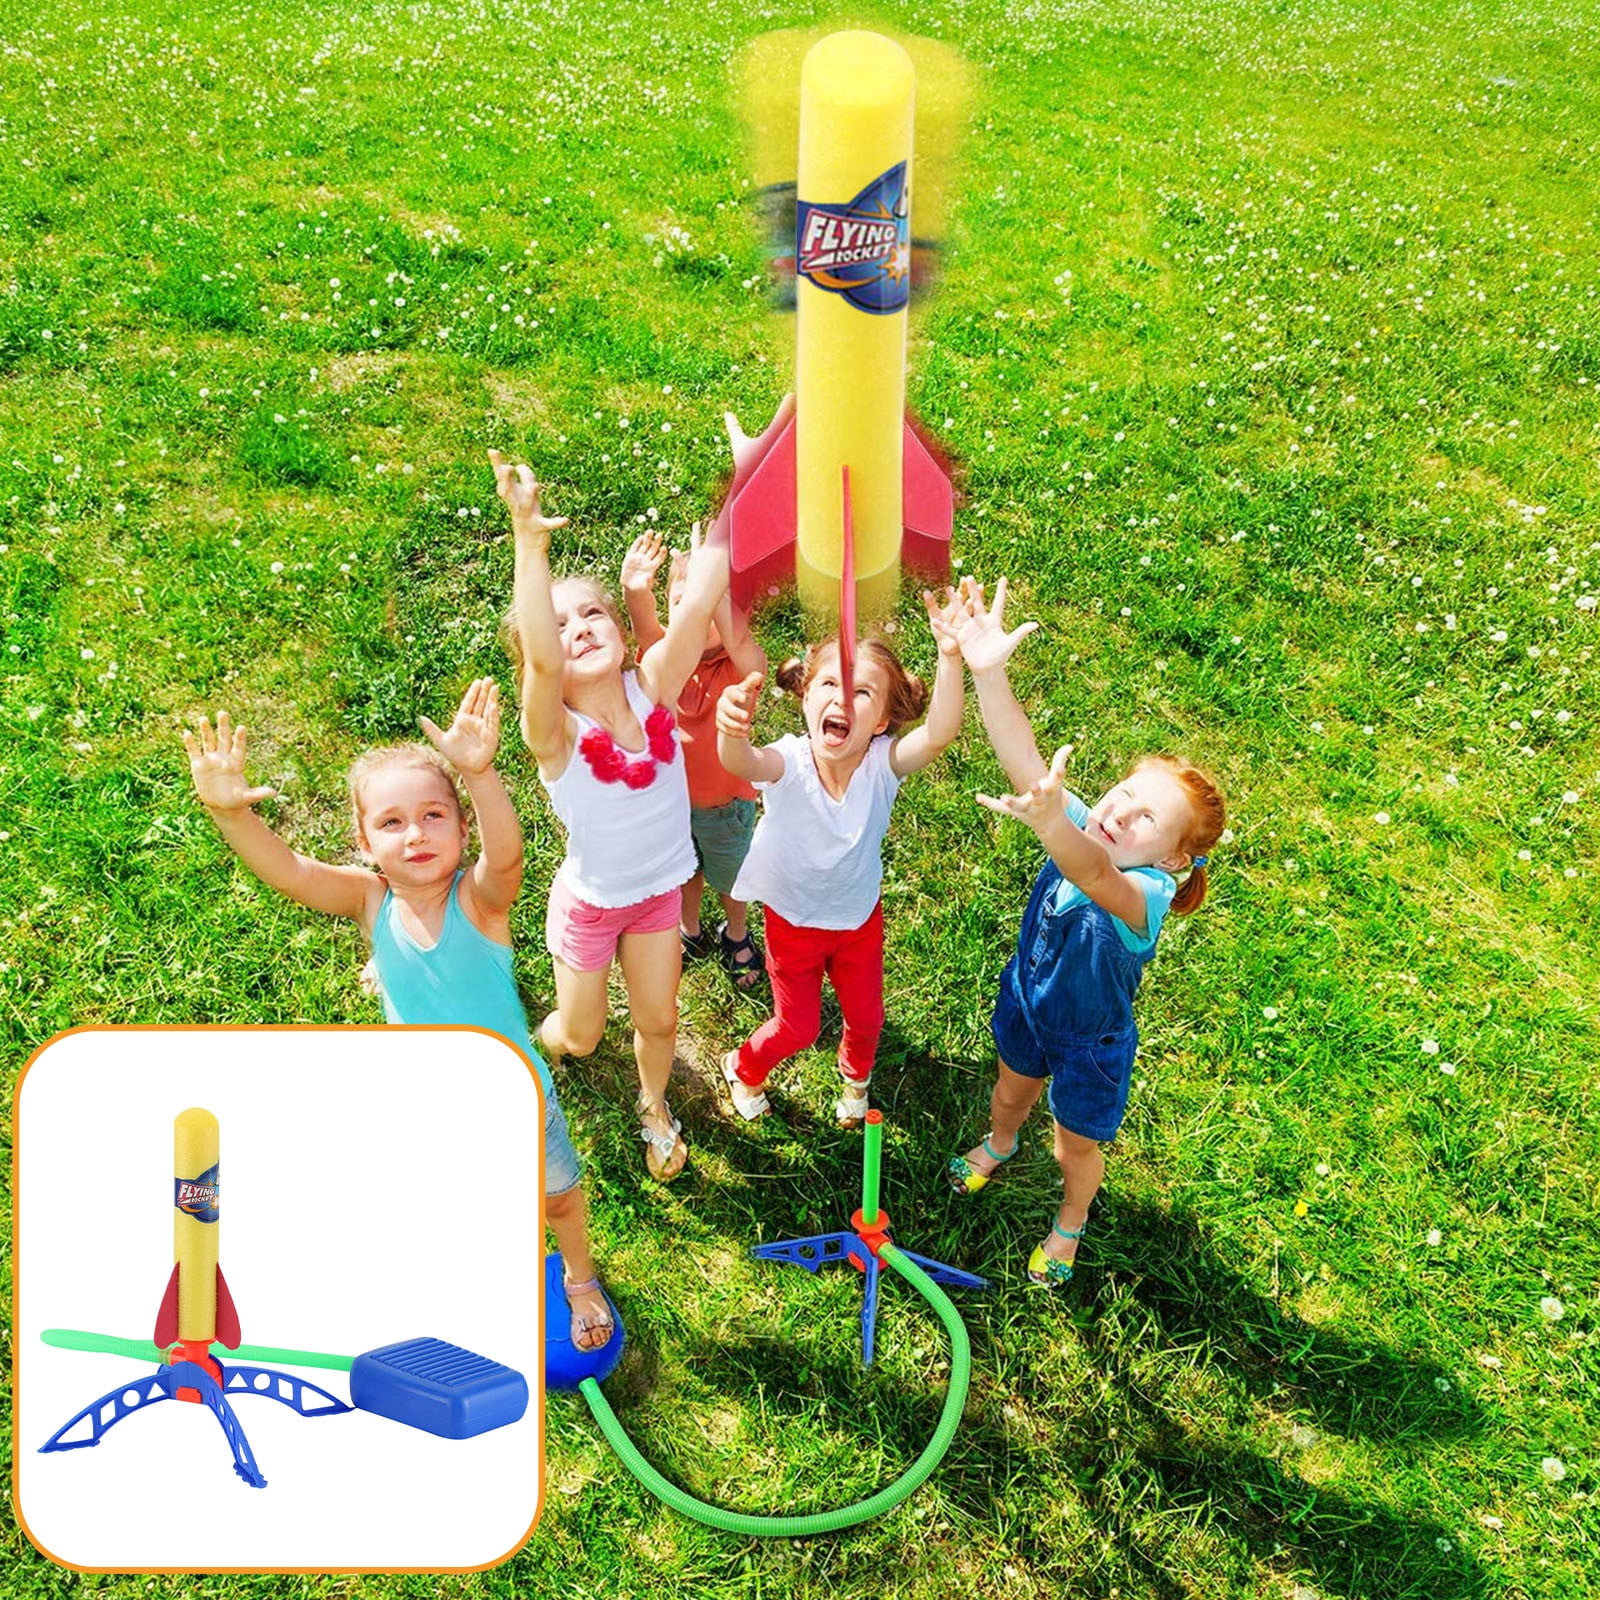 Duckura Jump Rocket Launchers for Kids Outdoor Air Rocket Toys with Launcher an 